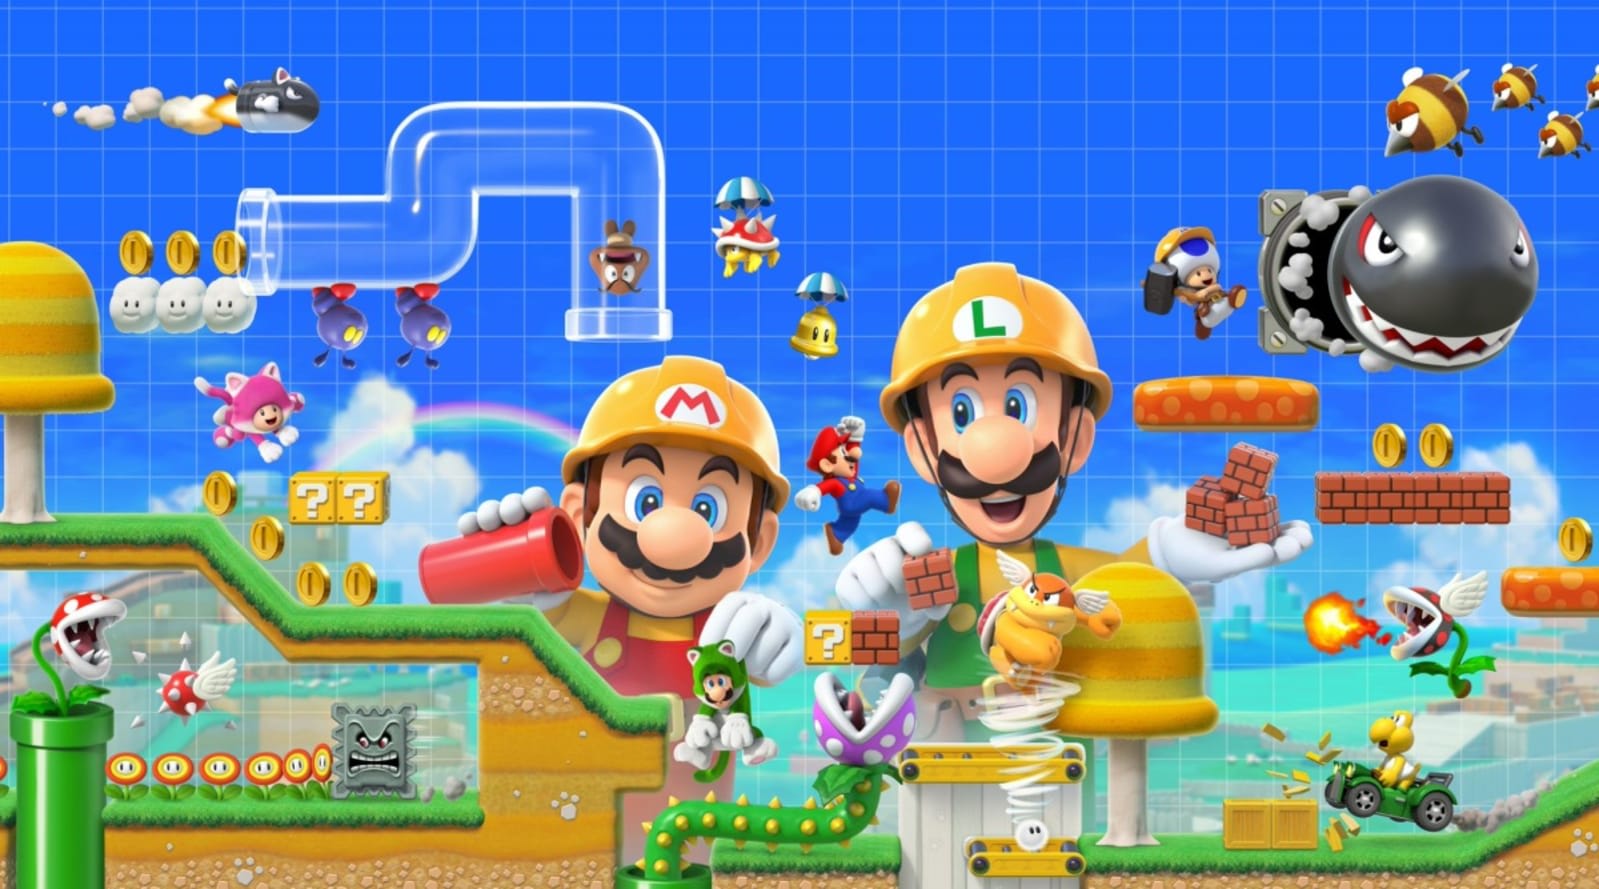 Watch the 'Super Mario Maker 2' Nintendo Direct here.